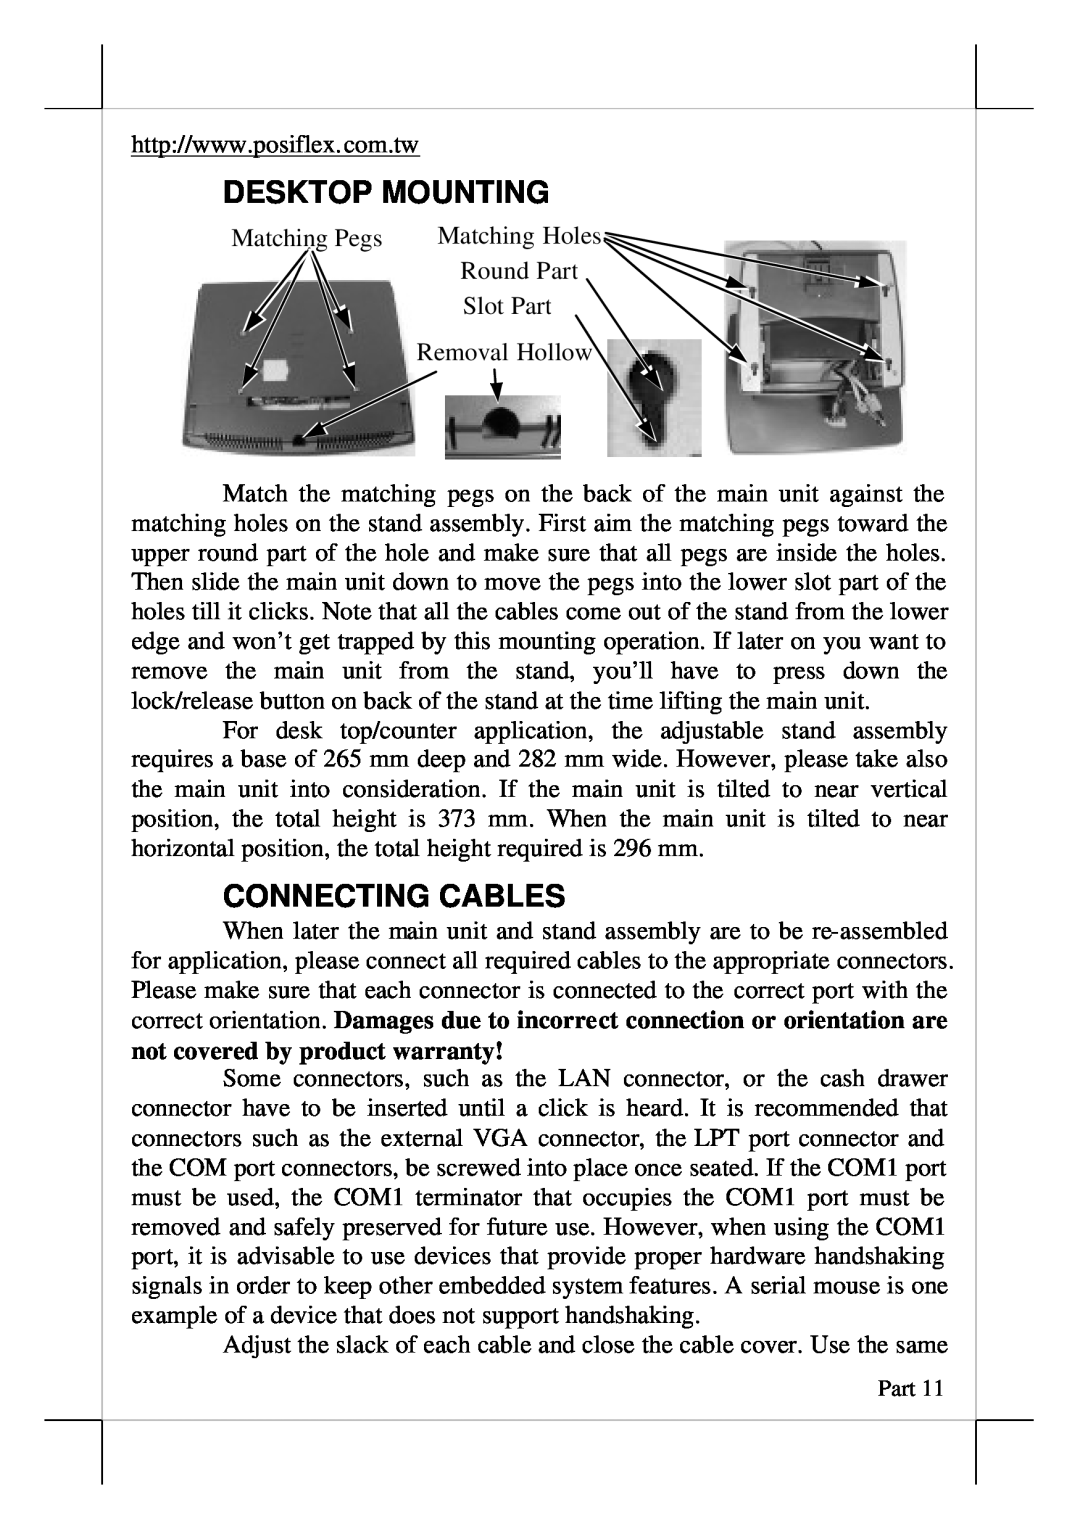 POSIFLEX Business Machines TP/LT- 5800, TP/LT- 5700, TP/LT- 5600, TP/LT- 8000 user manual Desktop Mounting, Connecting Cables 